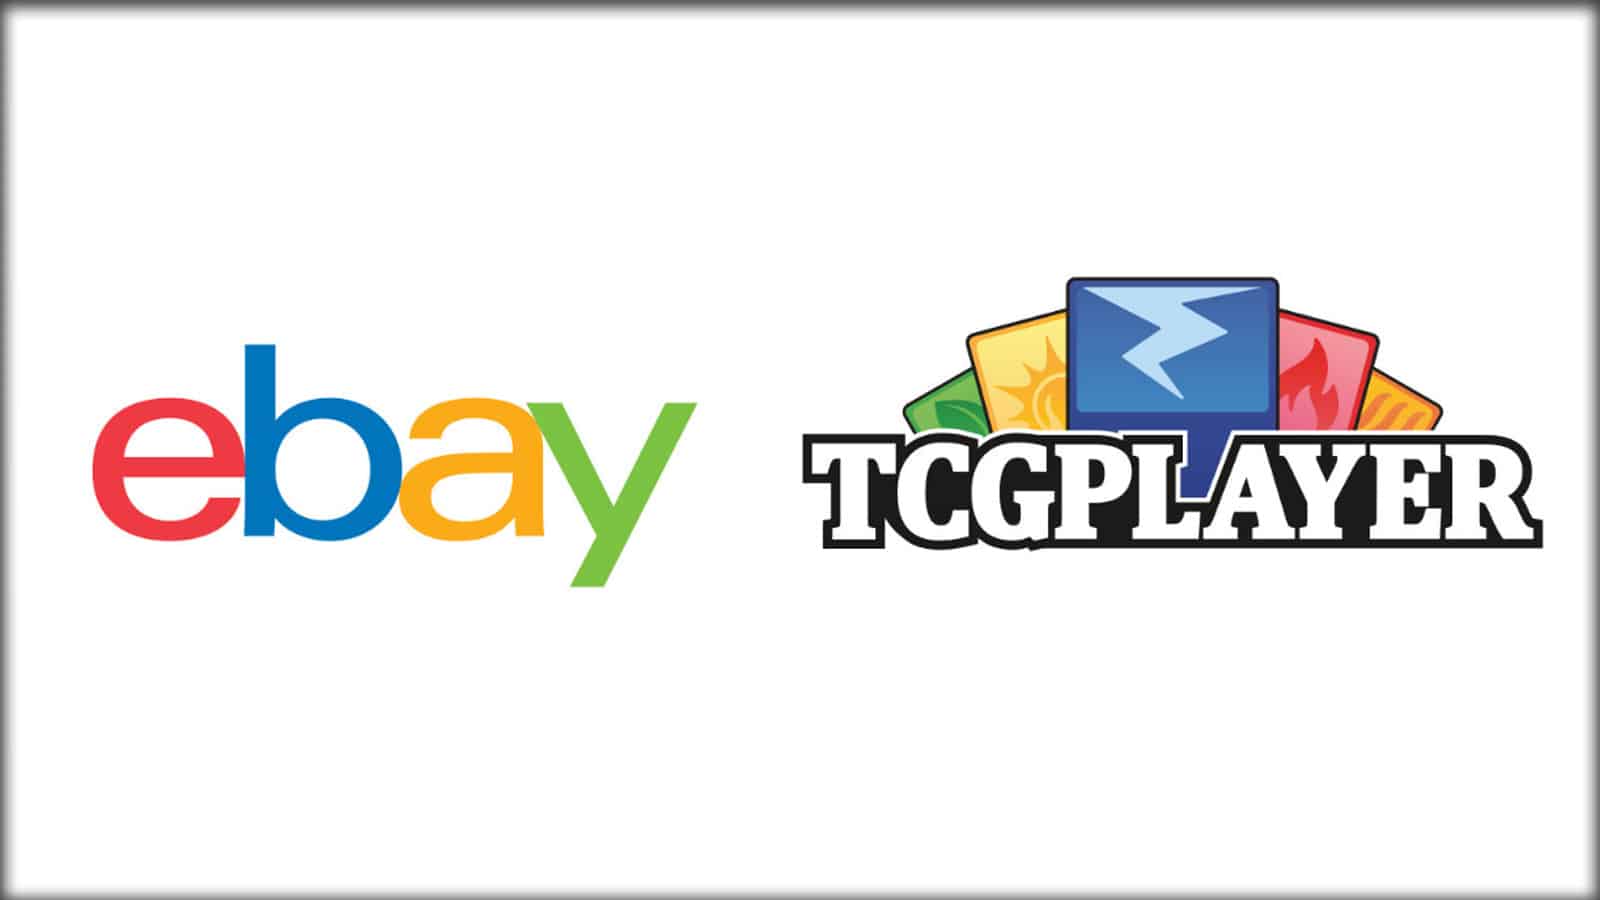 TCGPlayer ebay merger